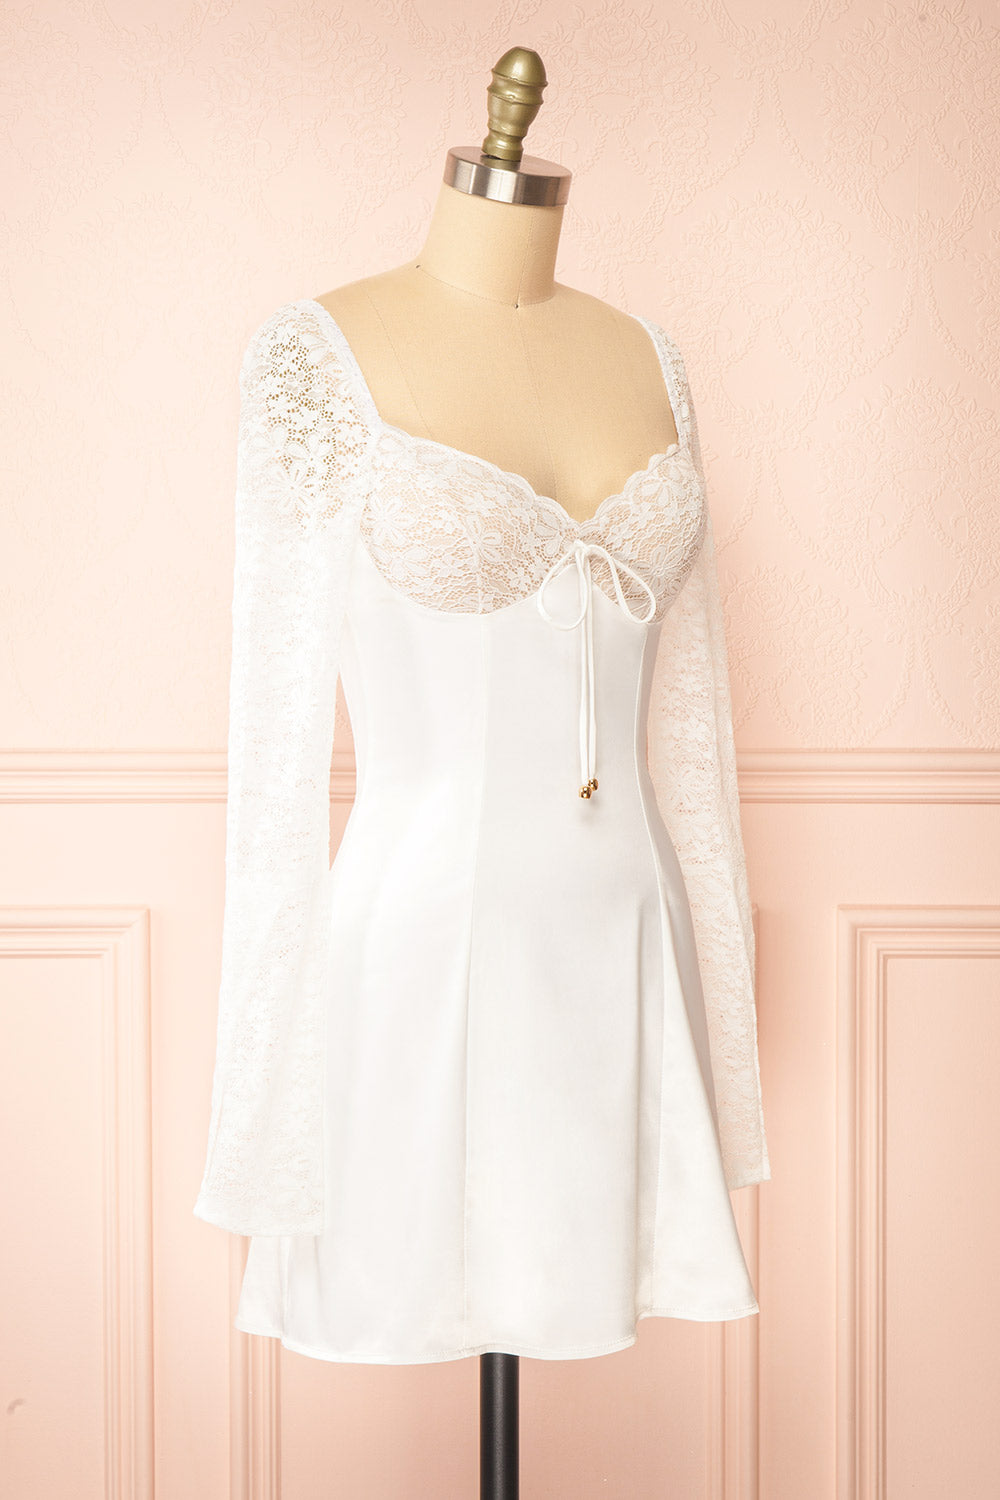 Faerelia Short White Satin Dress w/ Lace Sleeves | Boutique 1861 side view 